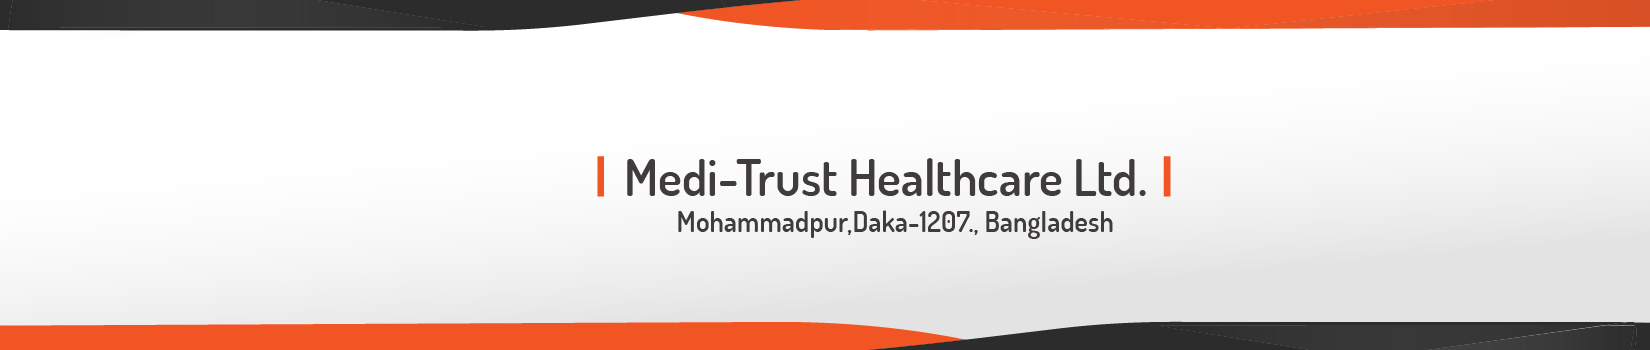 Medi-Trust Healthcare Ltd.